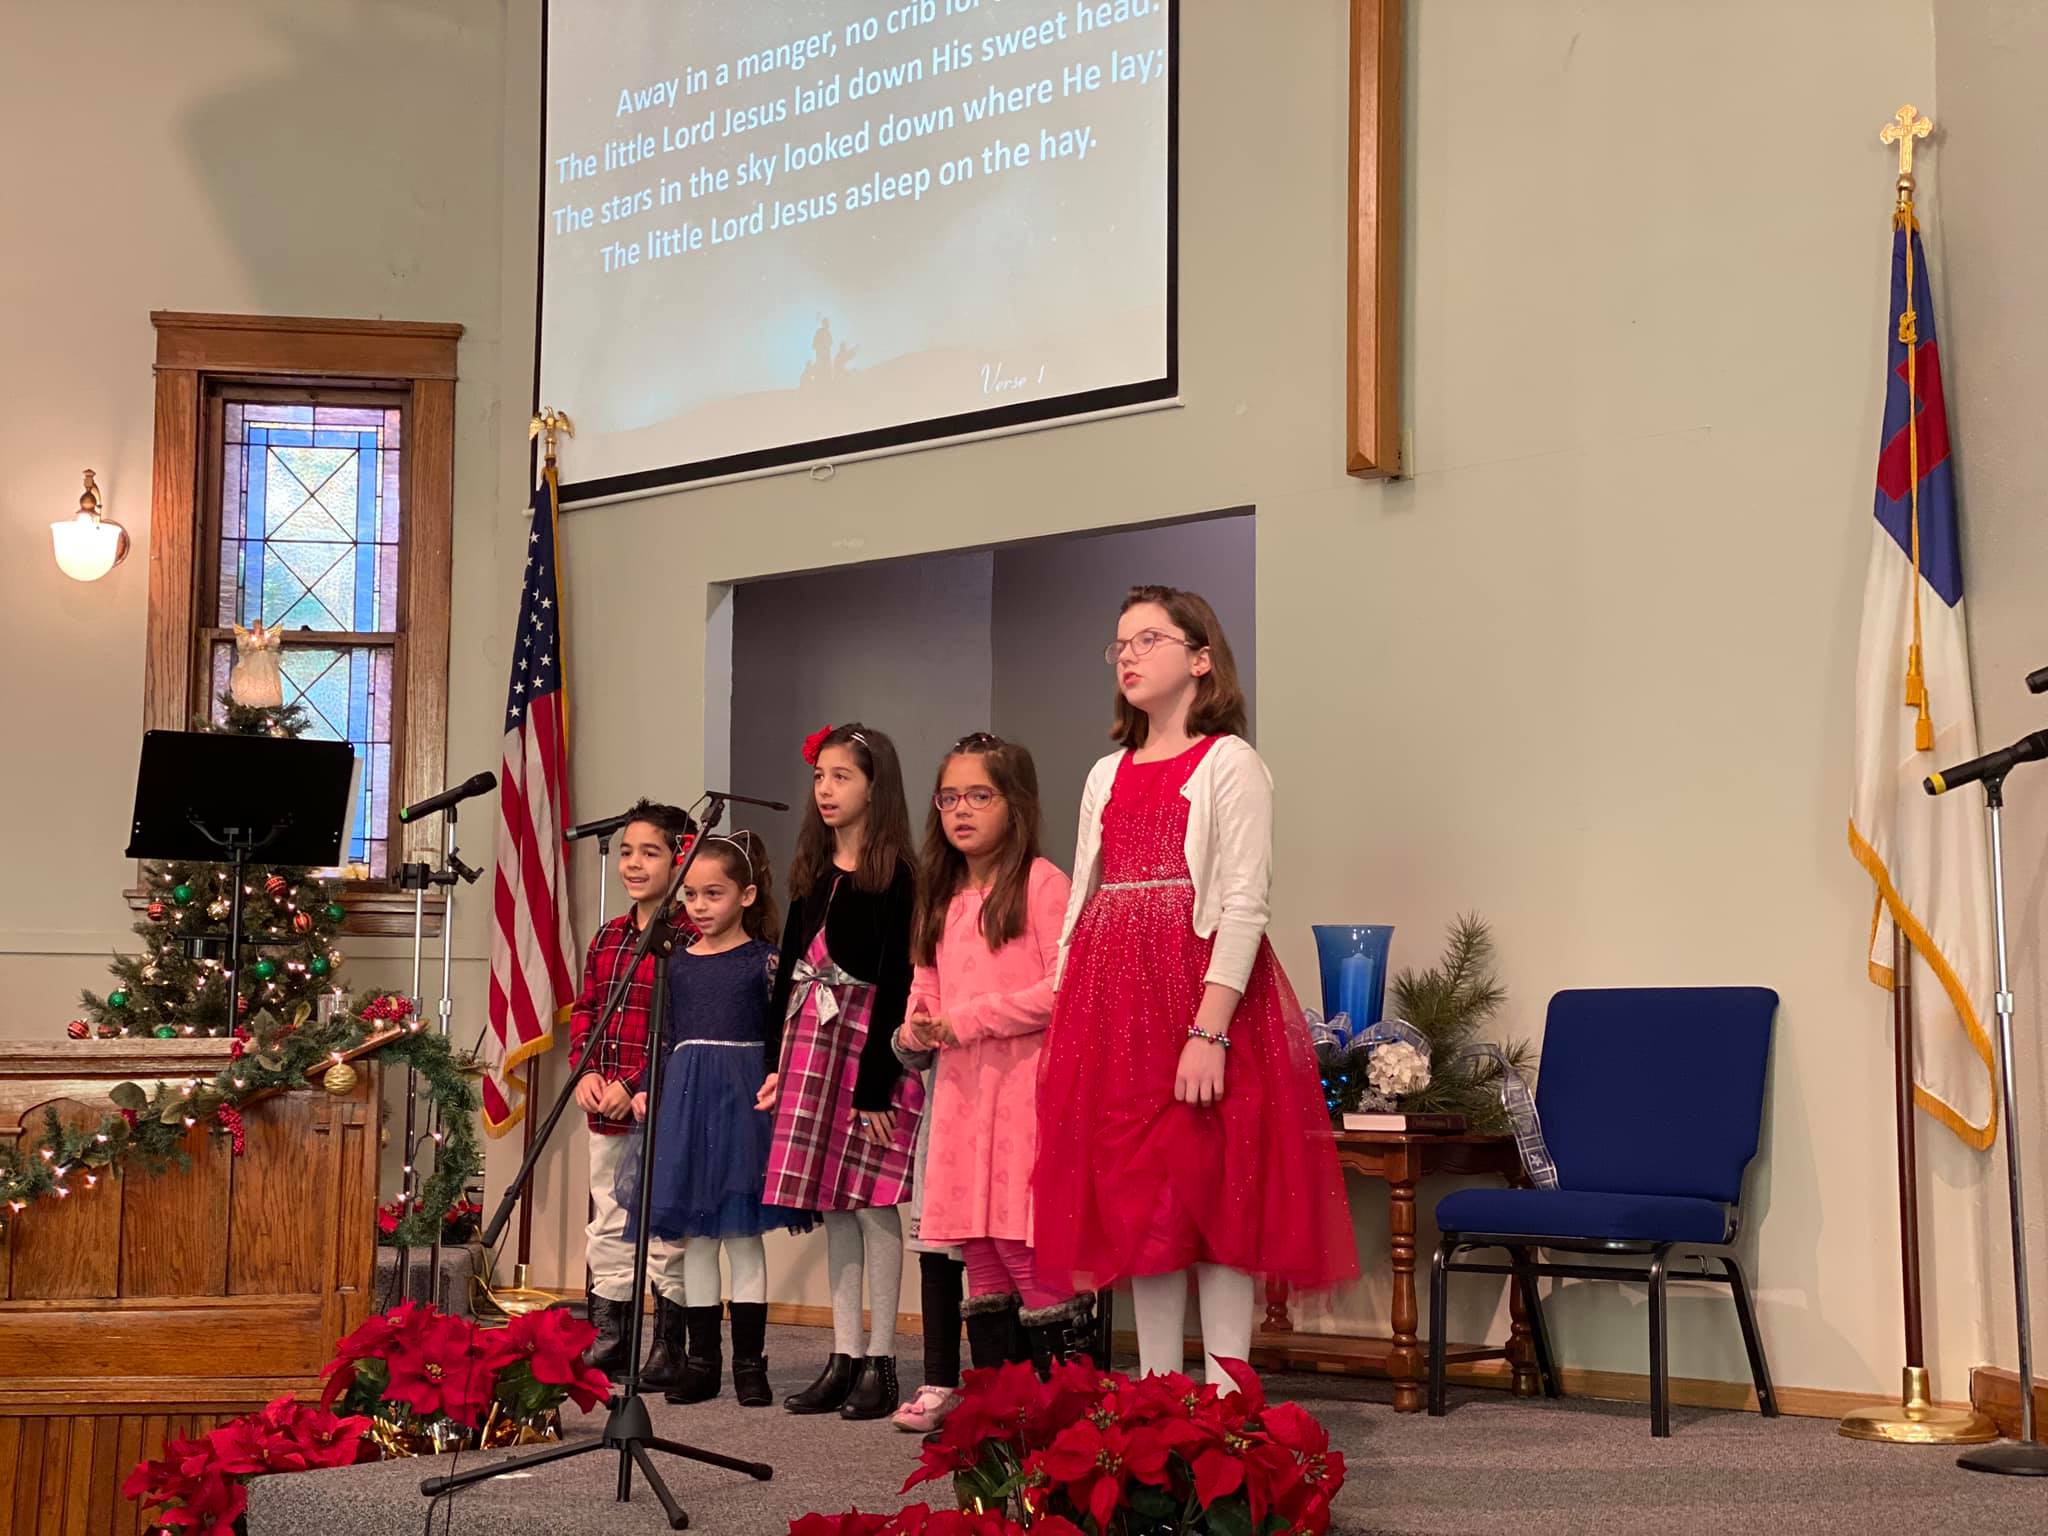 melody messengers children's choir singing